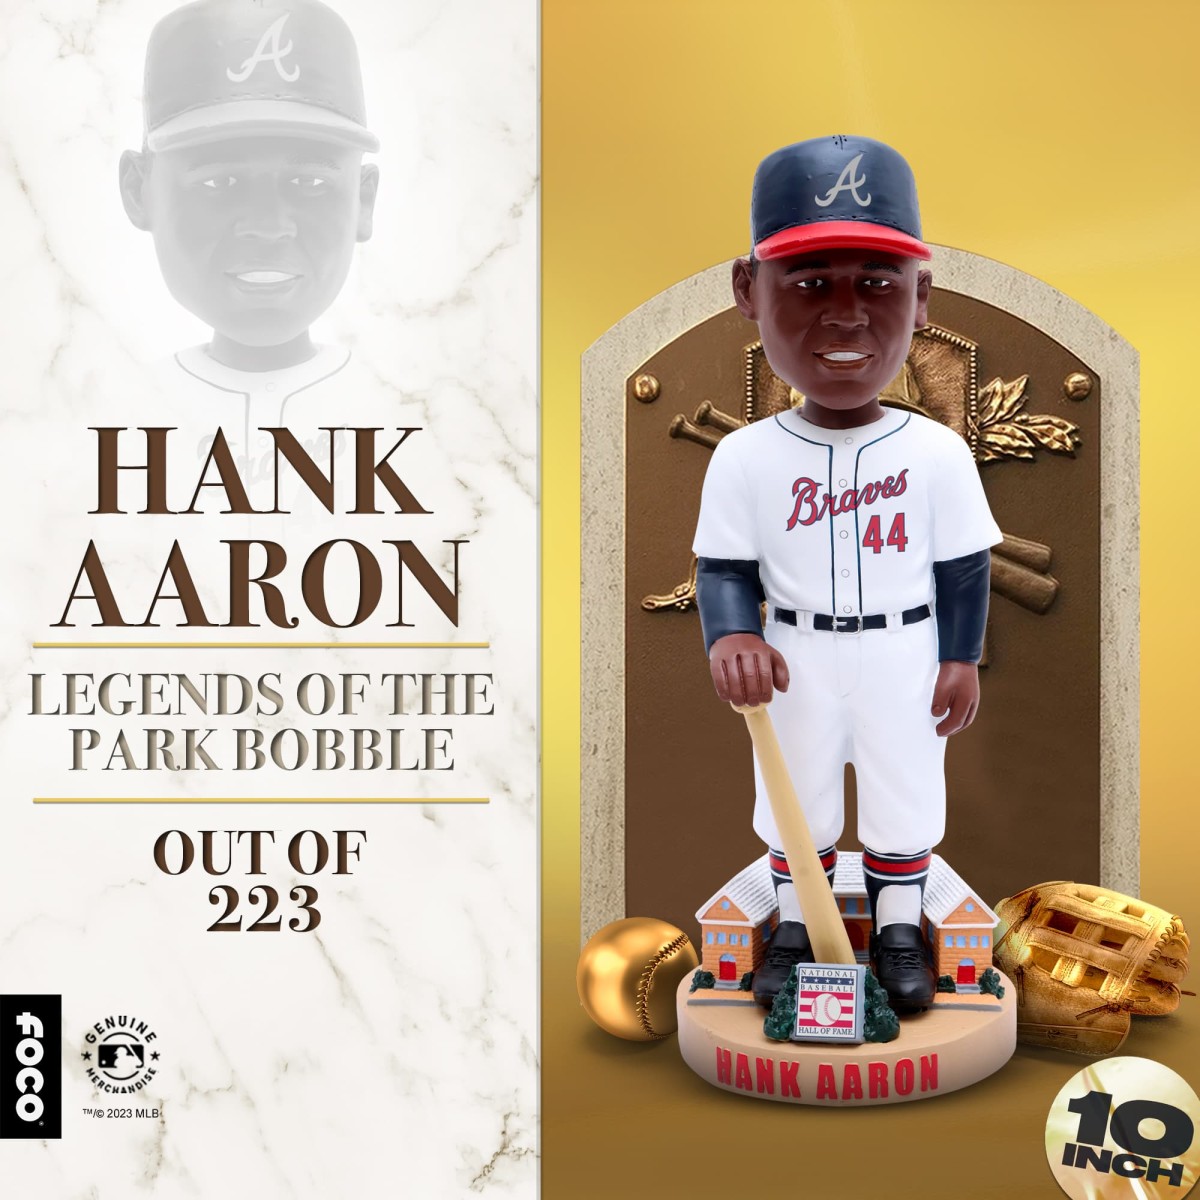 Atlanta Braves - Tonight's uniforms are Hank Aaron approved